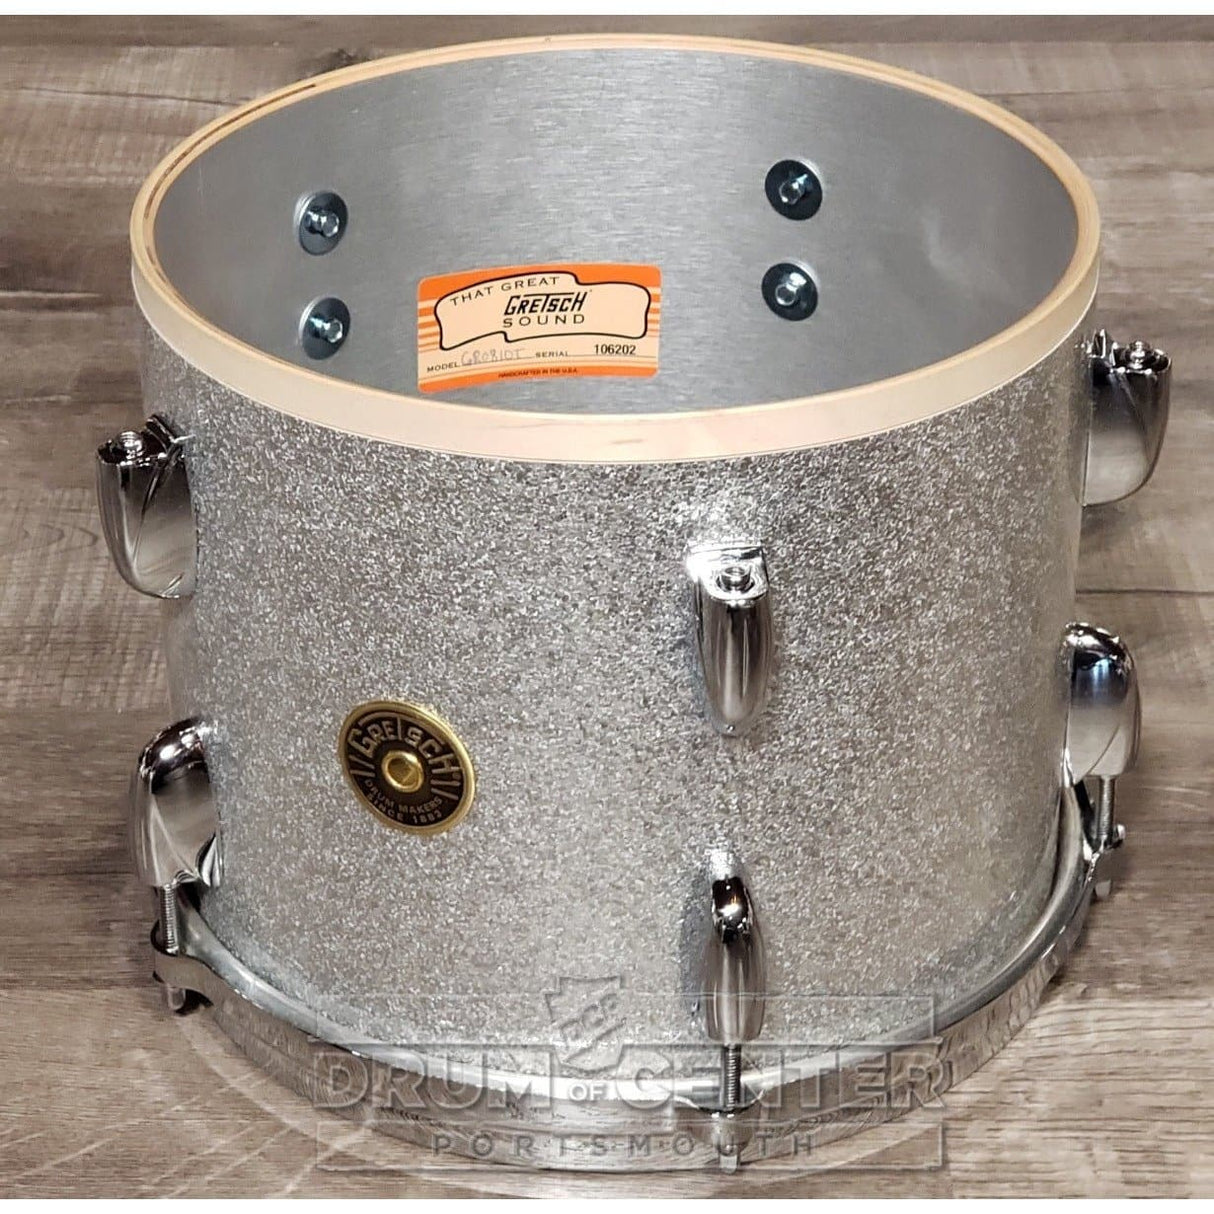 Gretsch USA Custom 5pc Drum Set Silver Sparkle